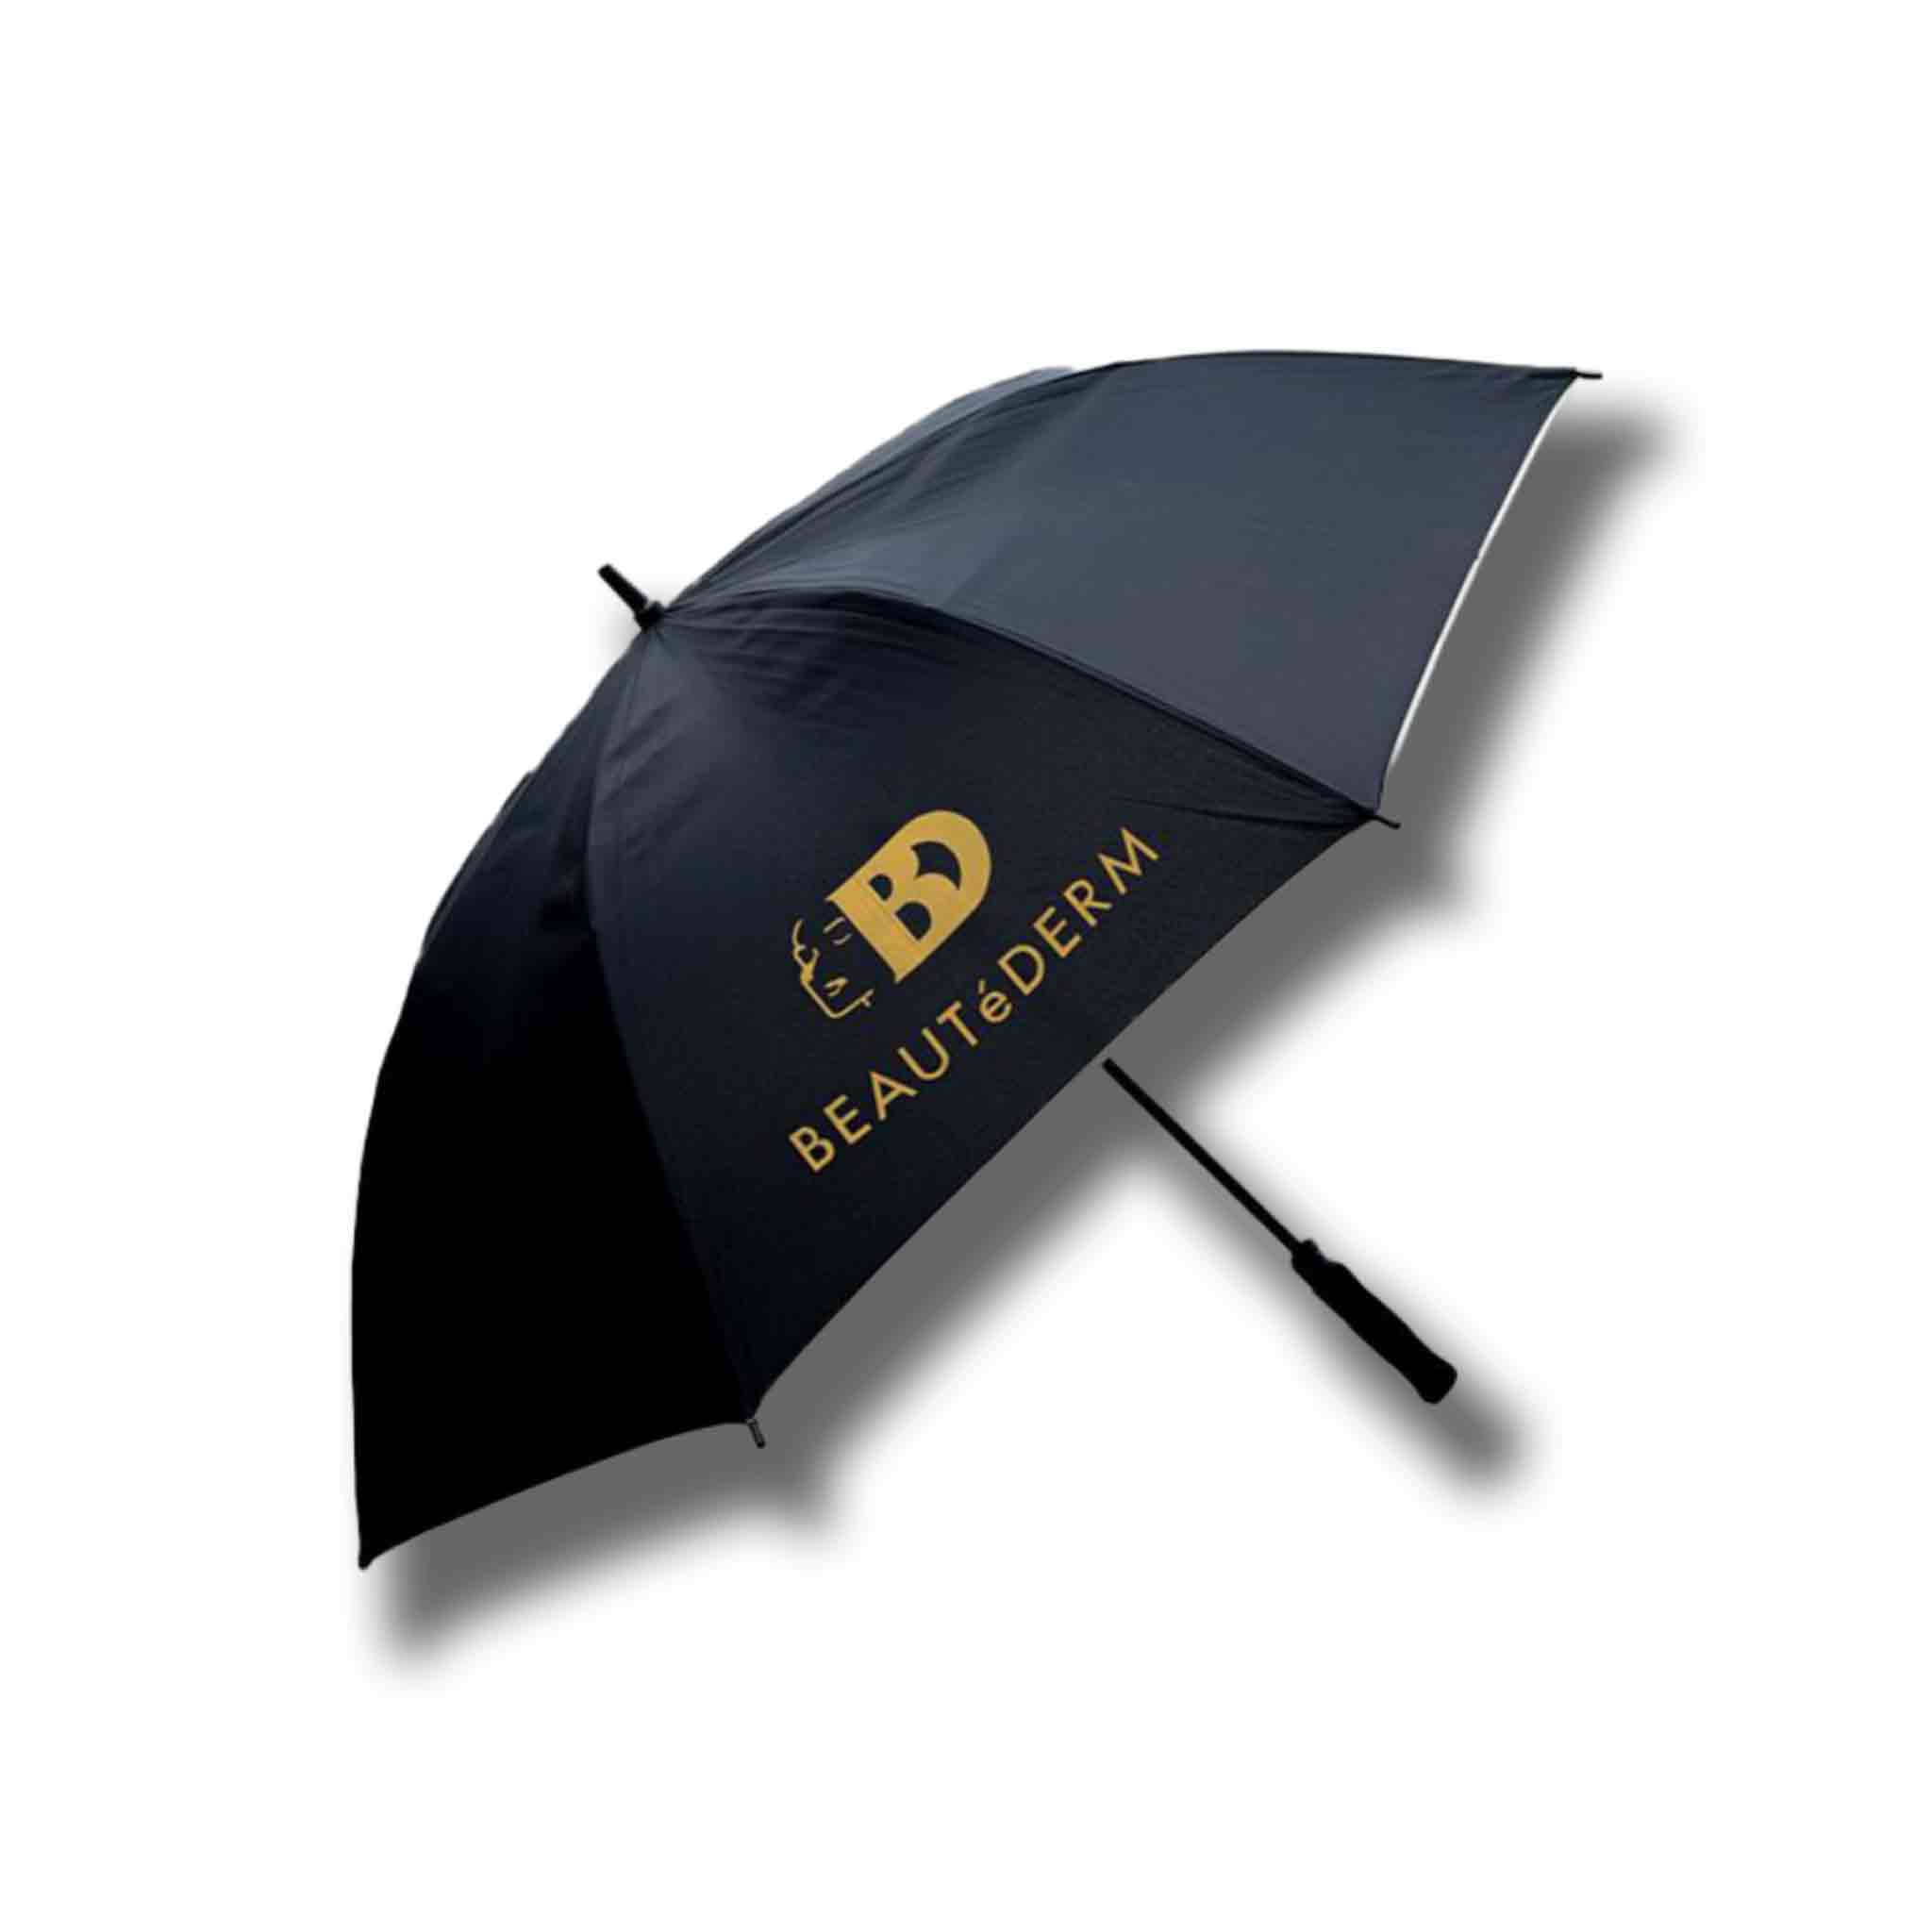 Beautederm Umbrella - Automatic Folding, Black